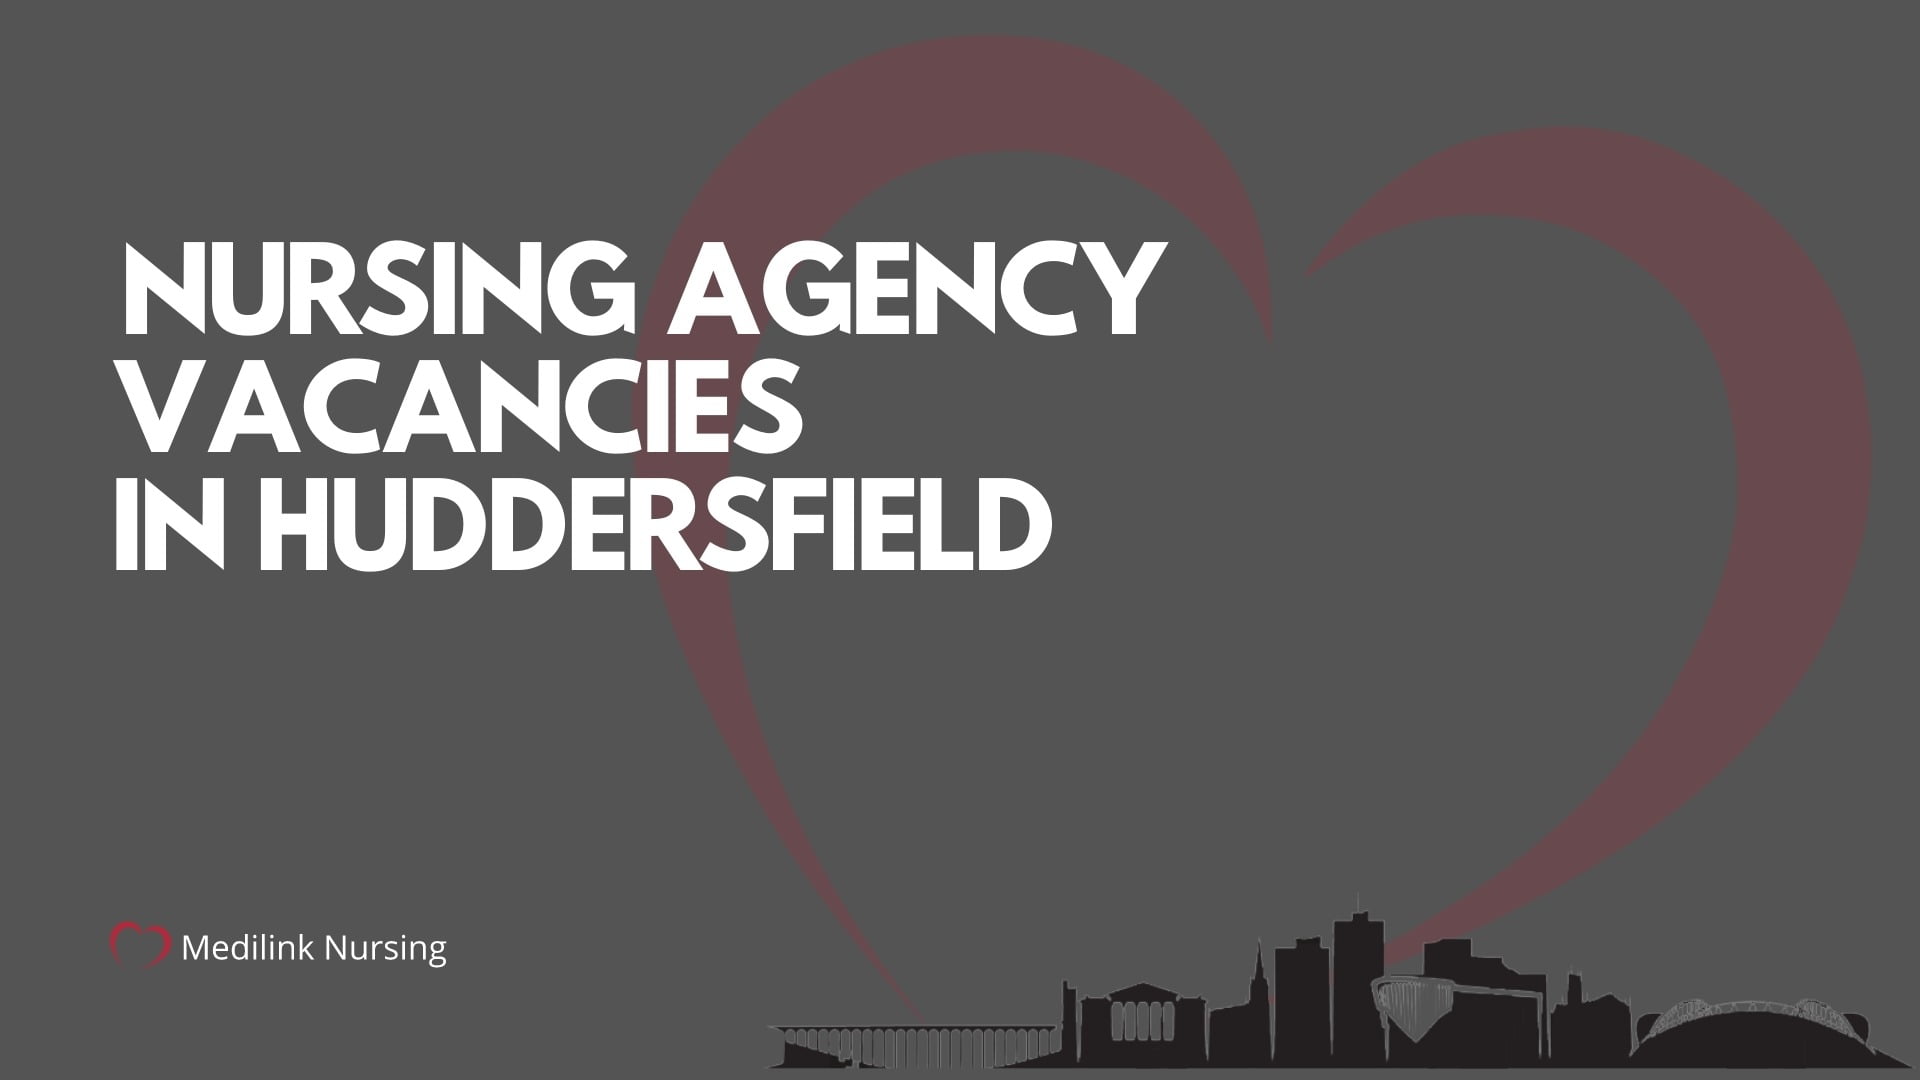 Nursing Agency Vacancies in Huddersfield